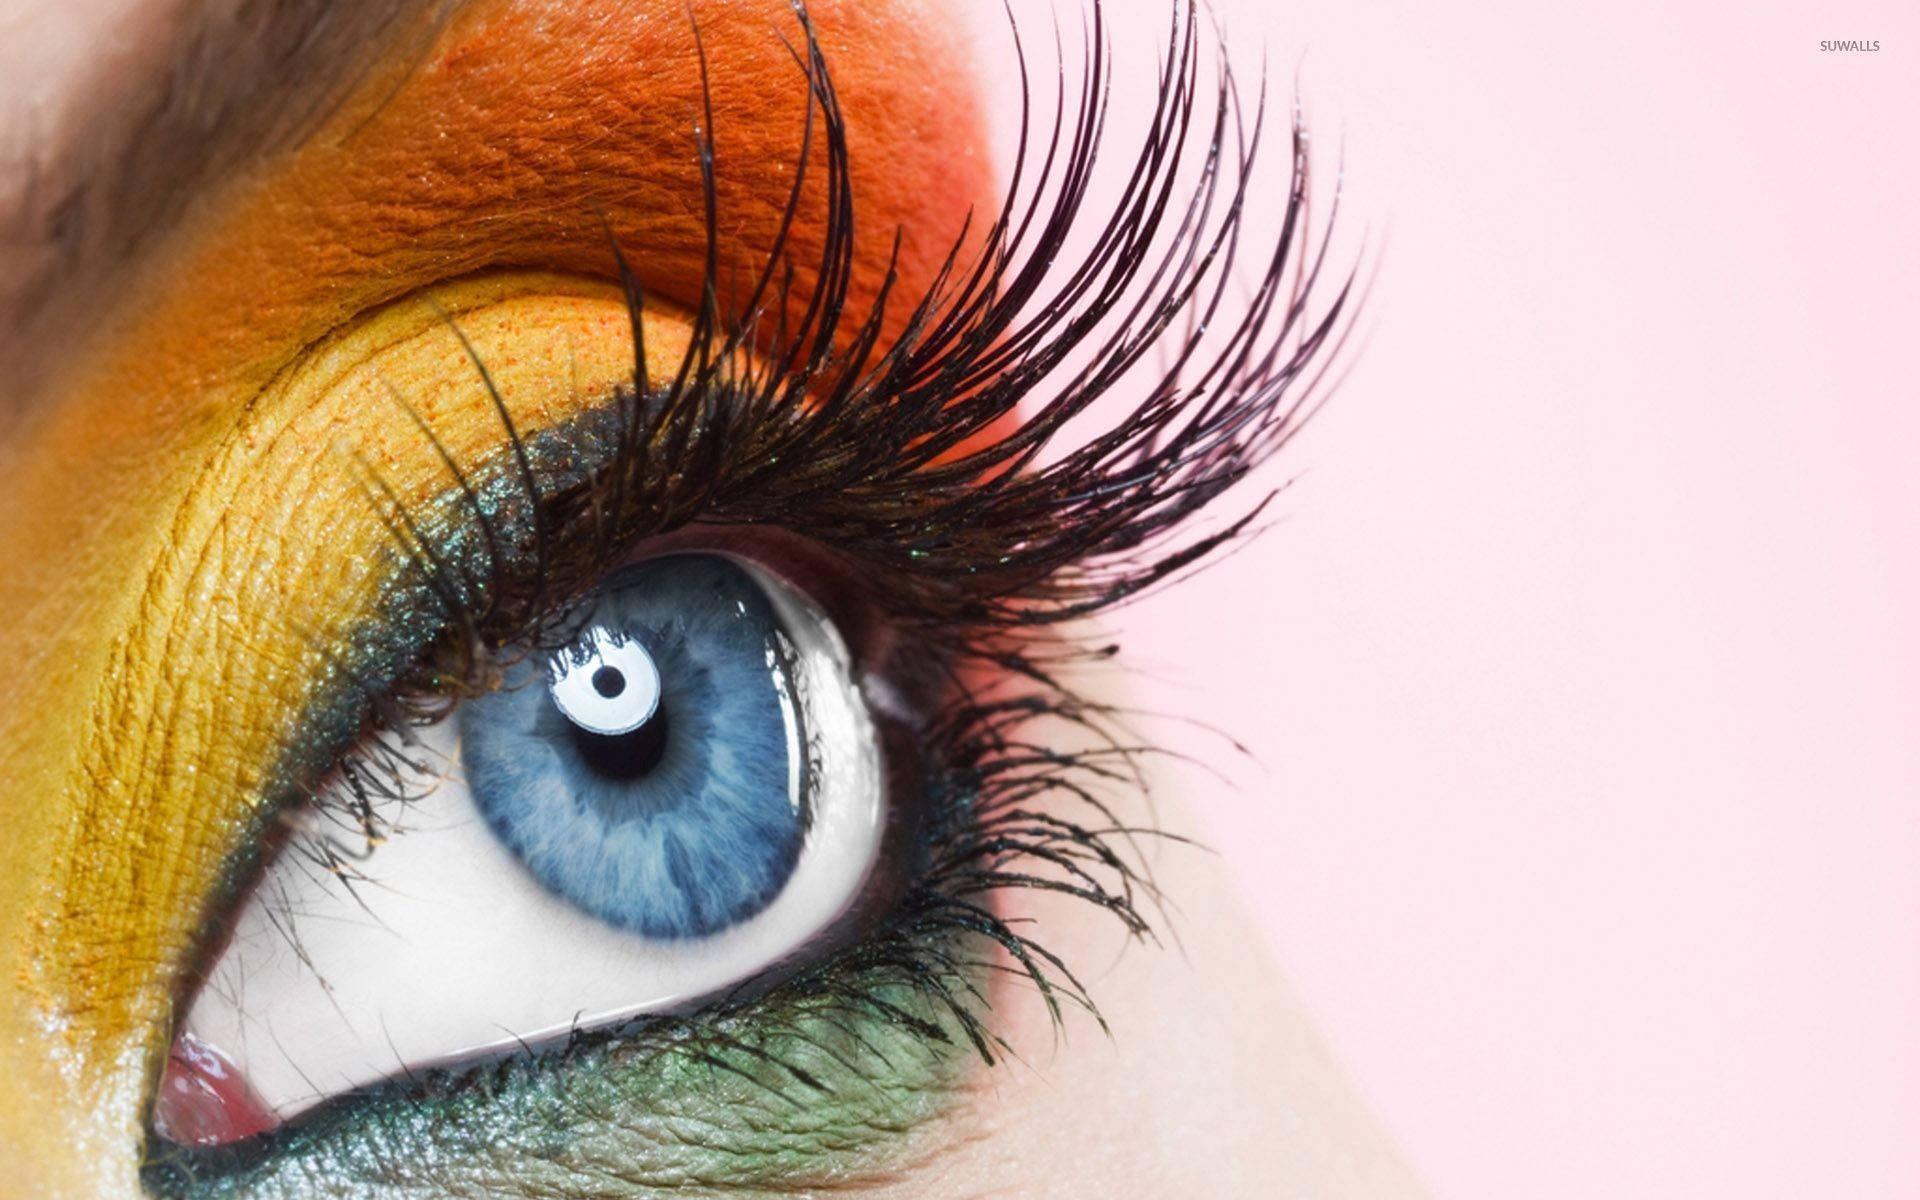 Woman With Orange And Yellow Eye Makeup